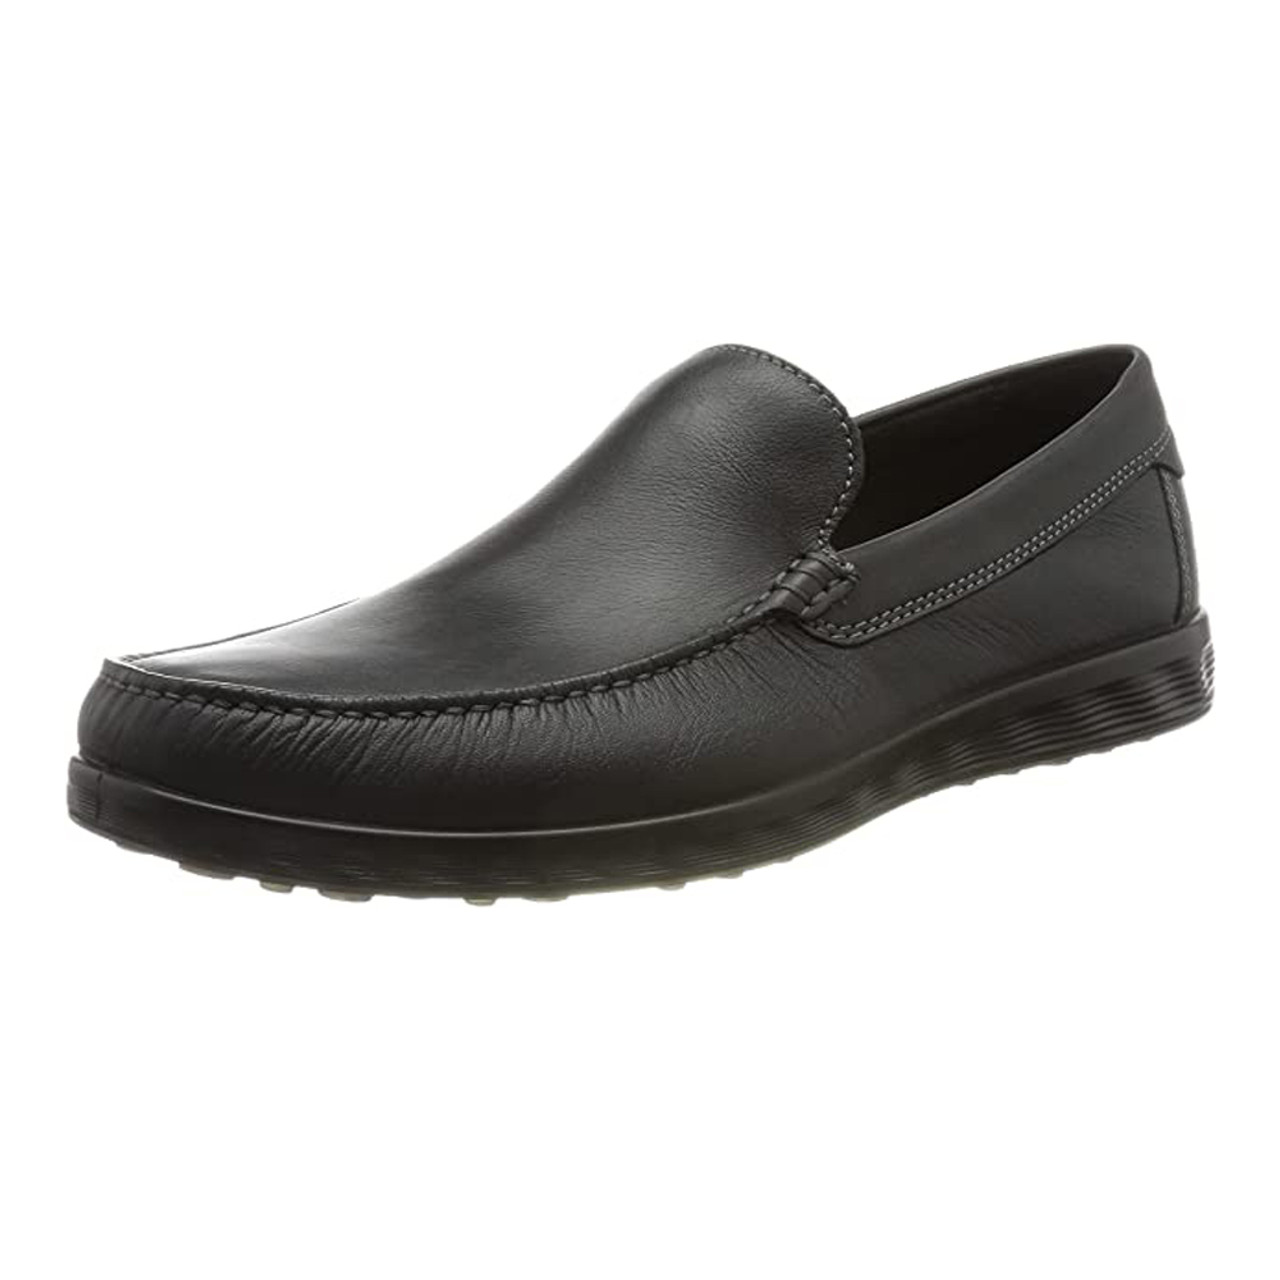 ECCO Men's S Lite Moc Loafer - Black | Discount ECCO Men's Shoes & More ...